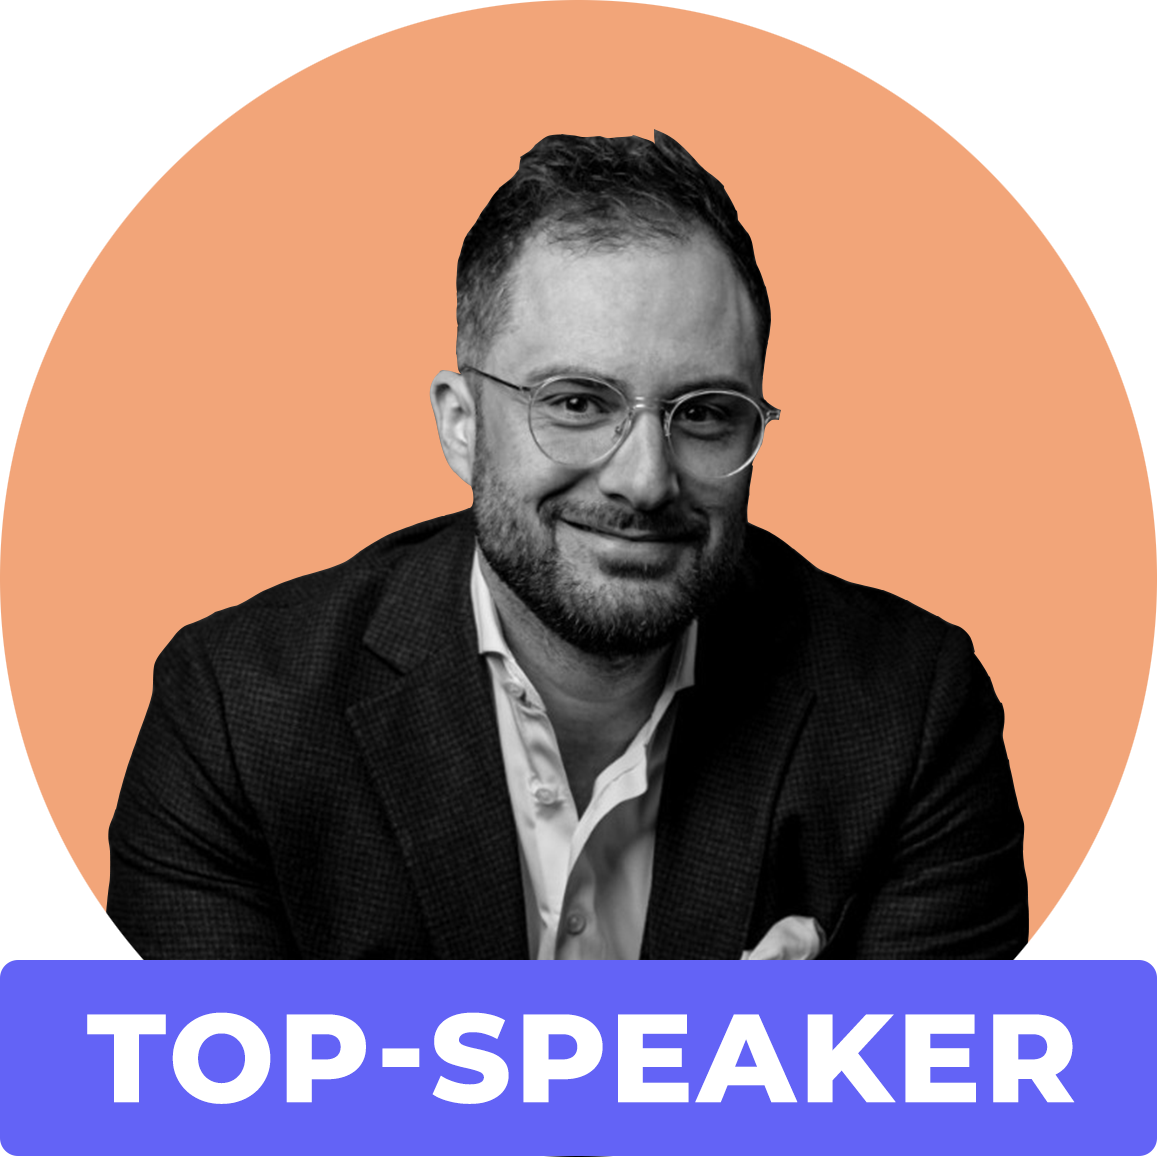 Speaker_JonasRashedi_TopSpeaker-3